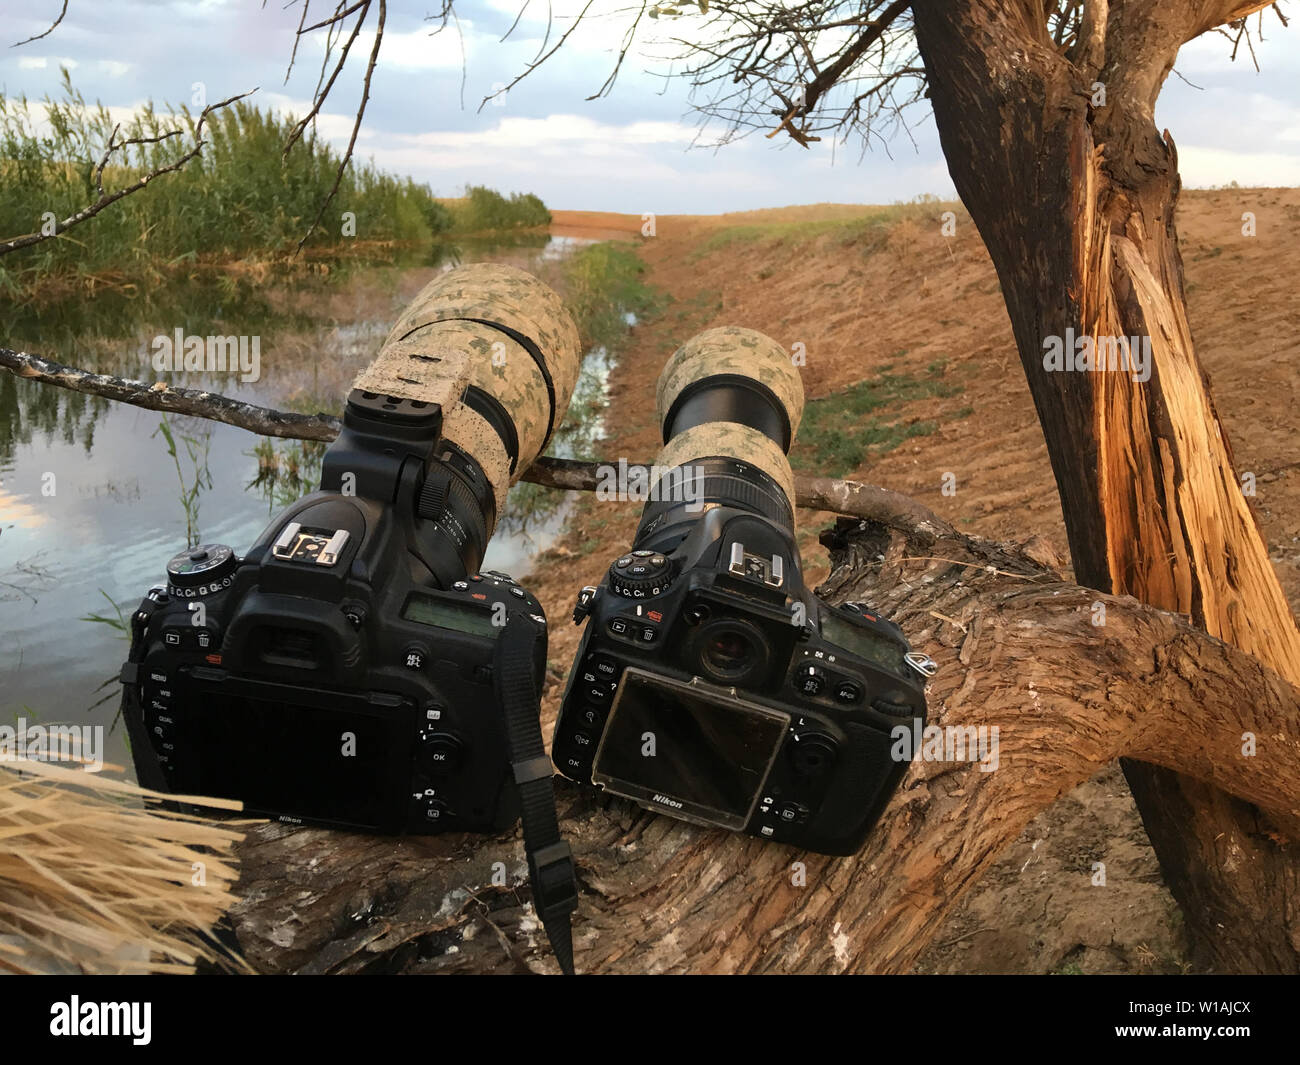 Camera Nikon D800 and Nikon D750, lens Tamron 150-600 g1 and g2 in Kalmykia Камера Никон Д750 и Д800 и объектив Тамрон 150-600 на съёмке дикой природы Stock Photo